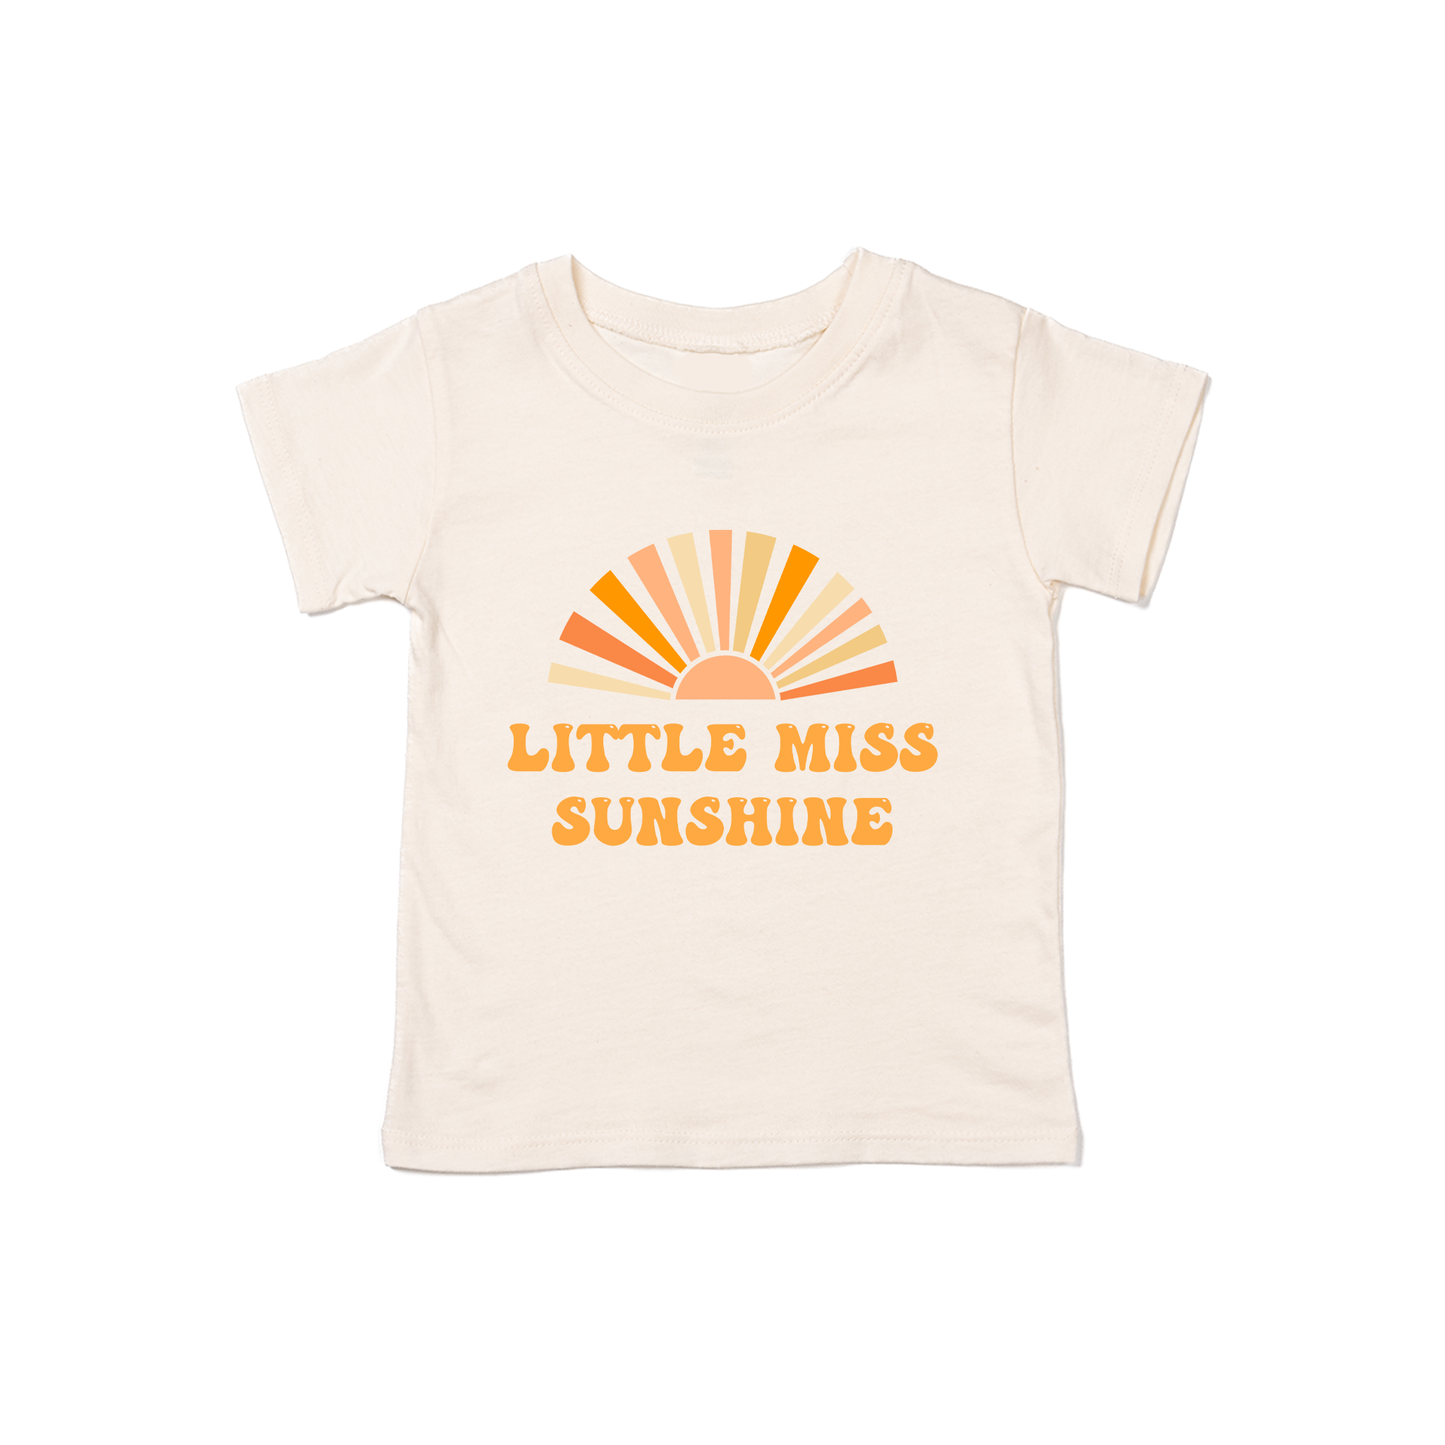 Little Miss Sunshine - Kids Tee (Natural)